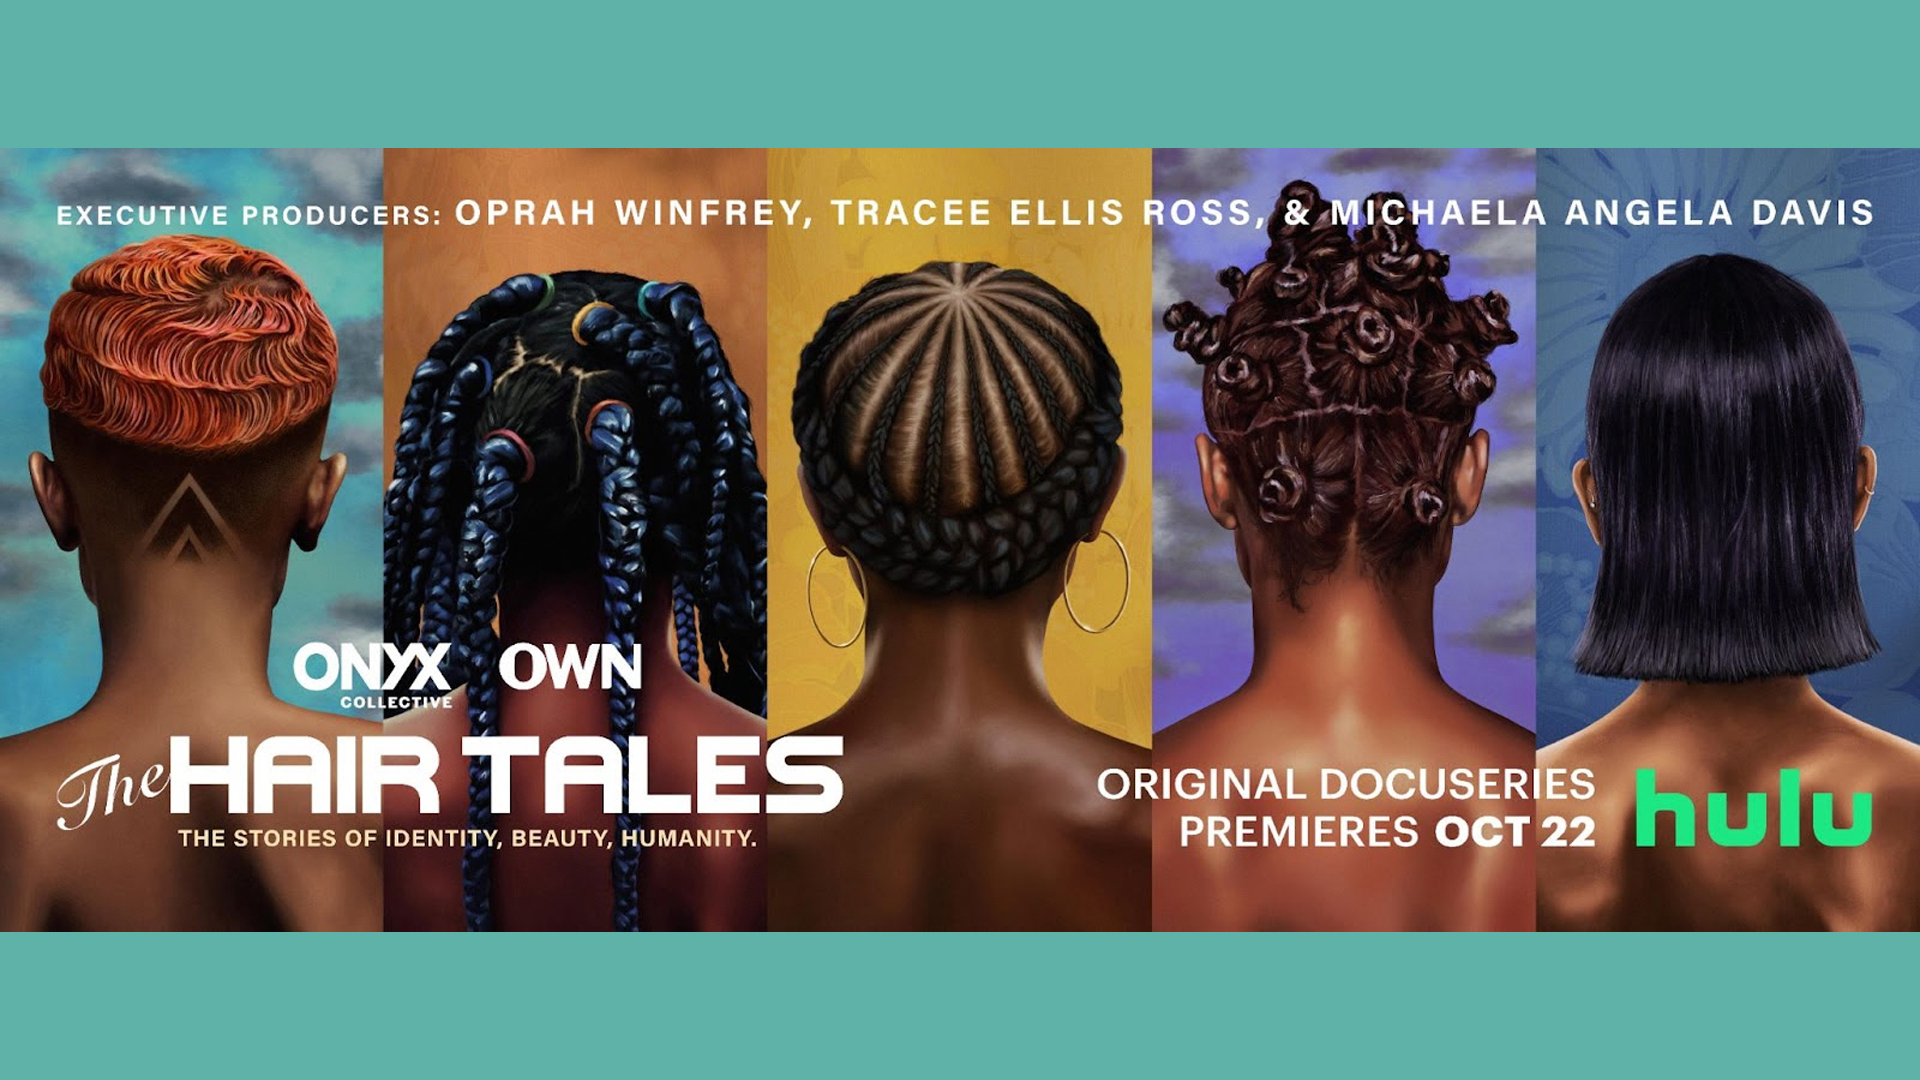 The Hair Tales celebrates Black womanhood